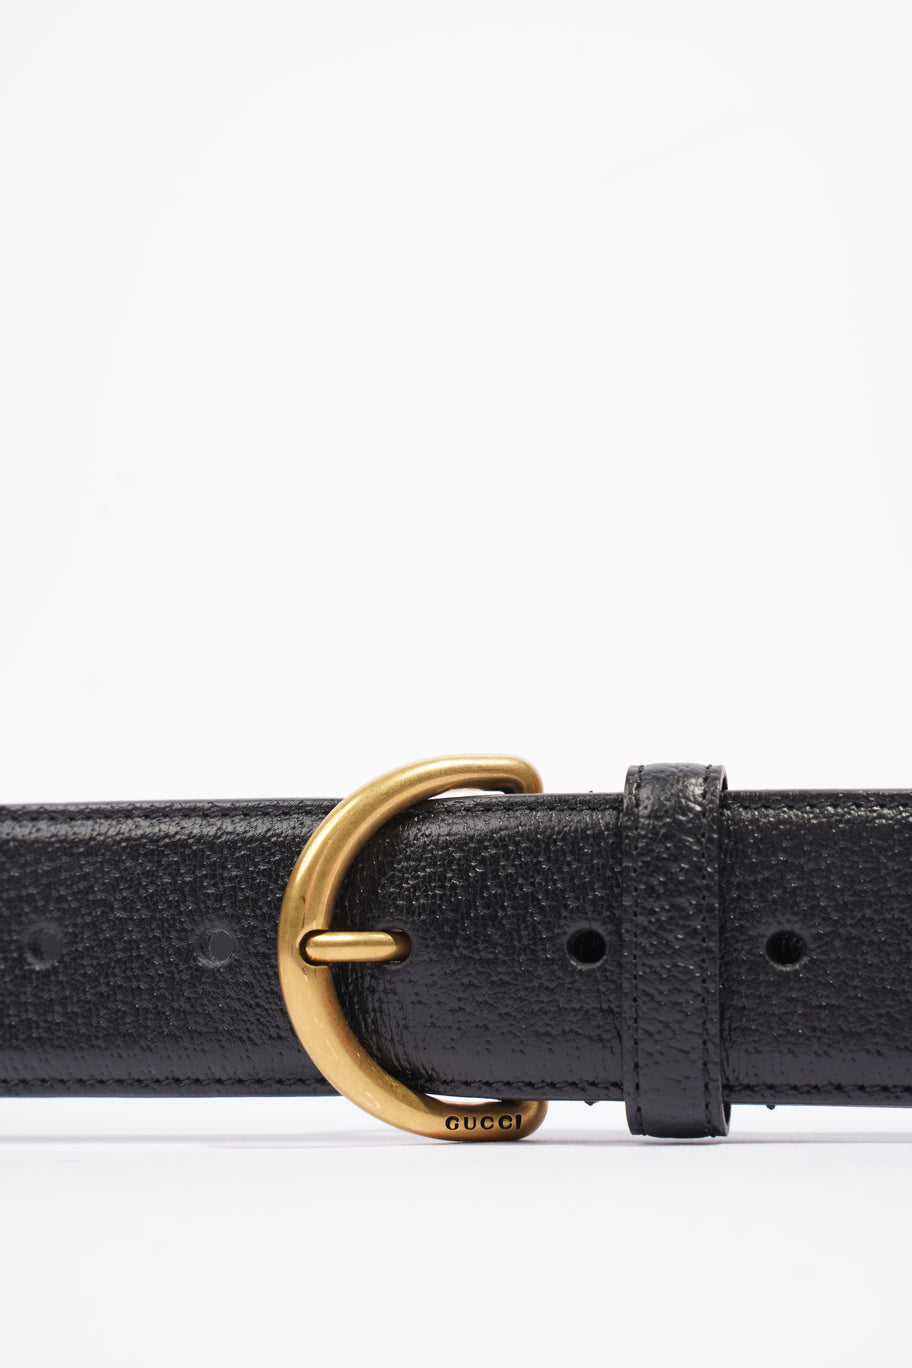 Buckle Belt Black / Gold Buckle Leather 90cm 36